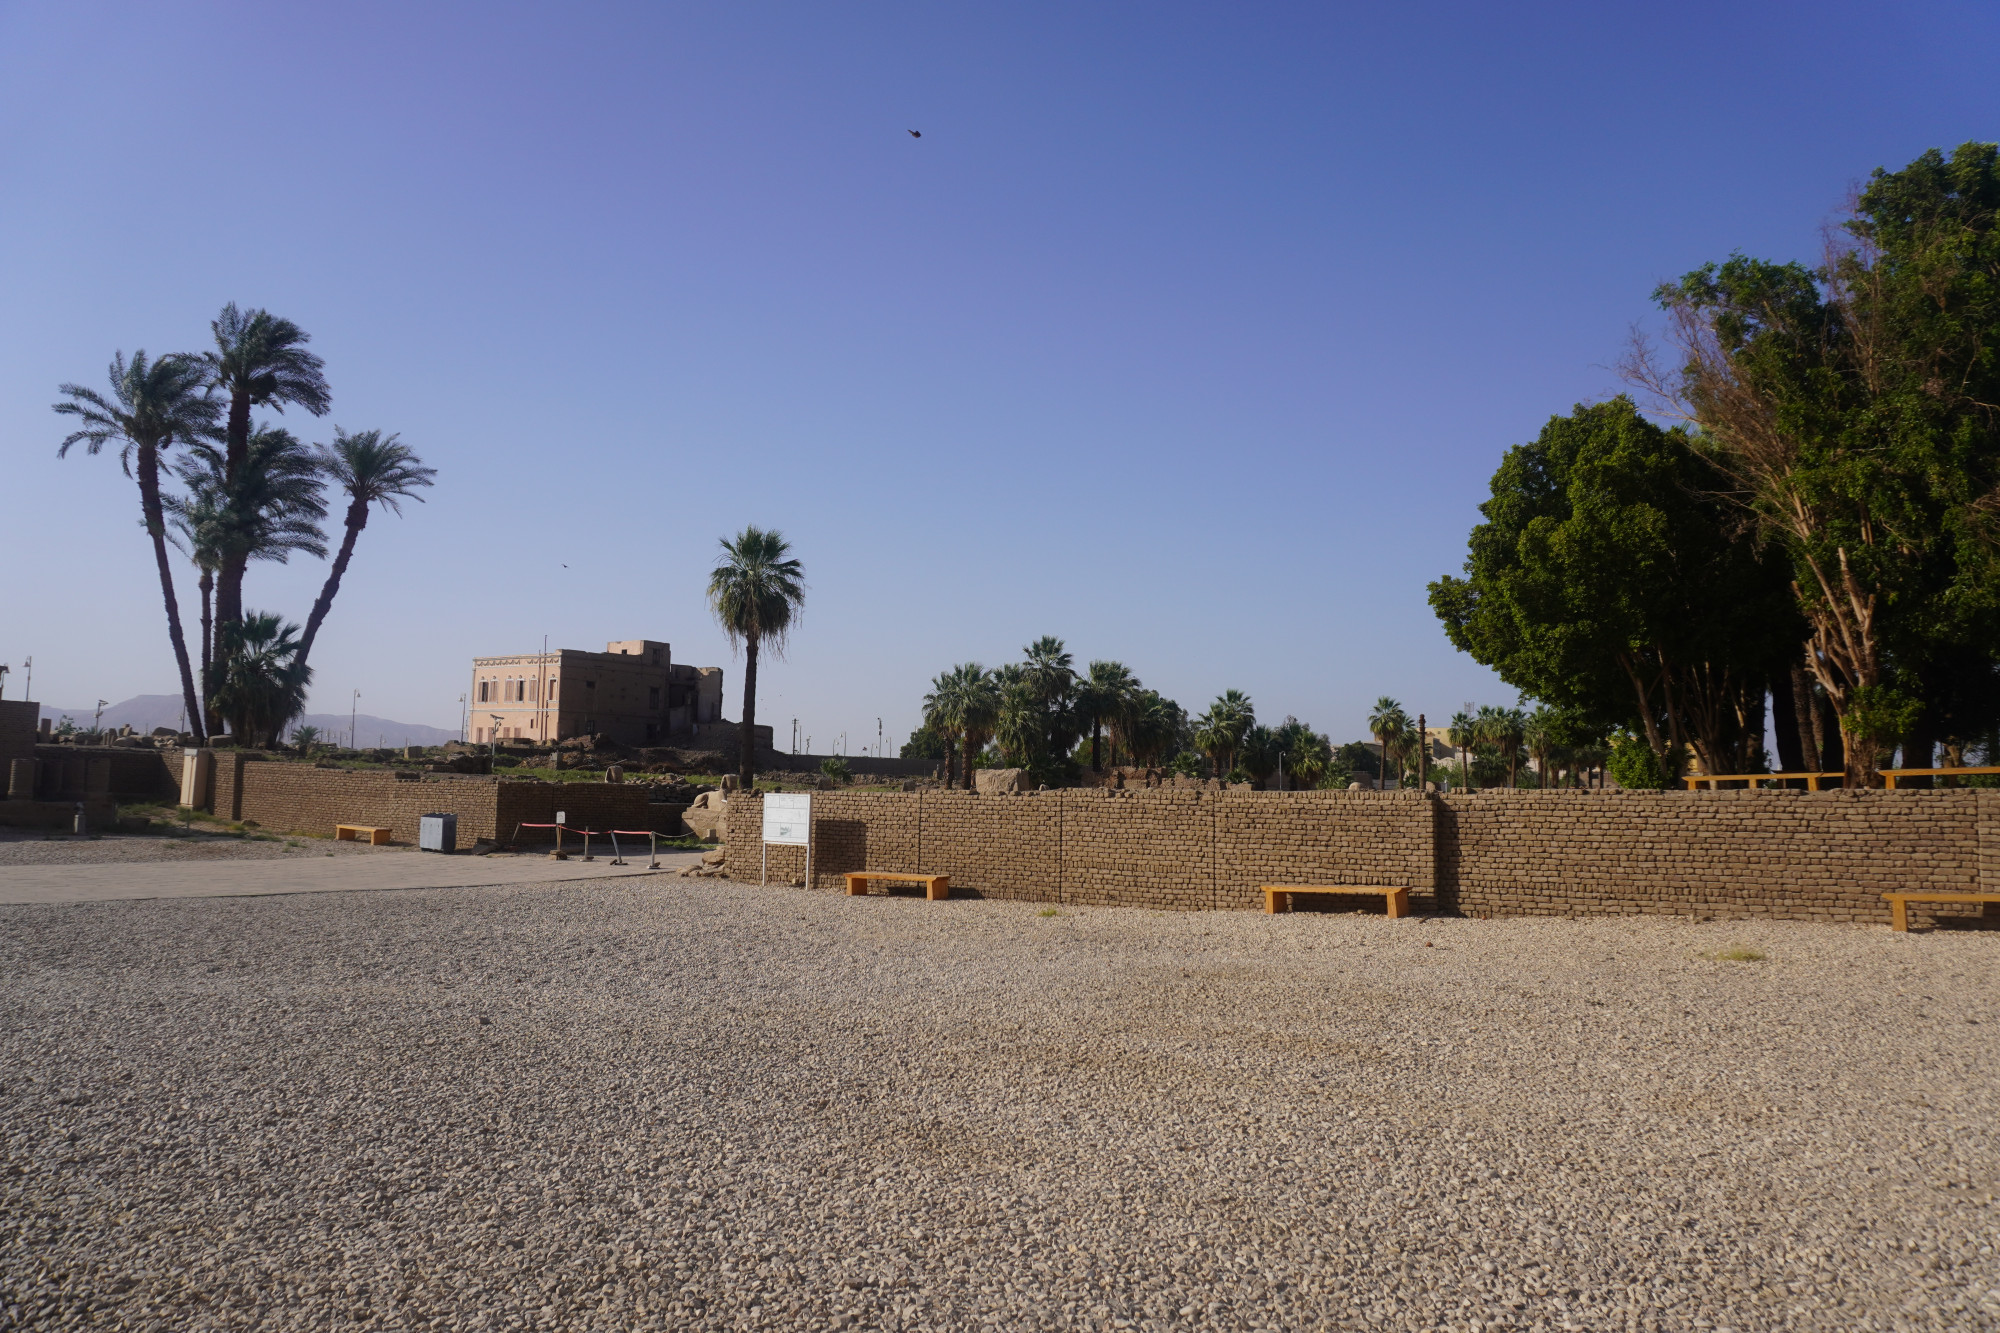 Луксор. Около входа в Луксорский храм. (17.05.2021)